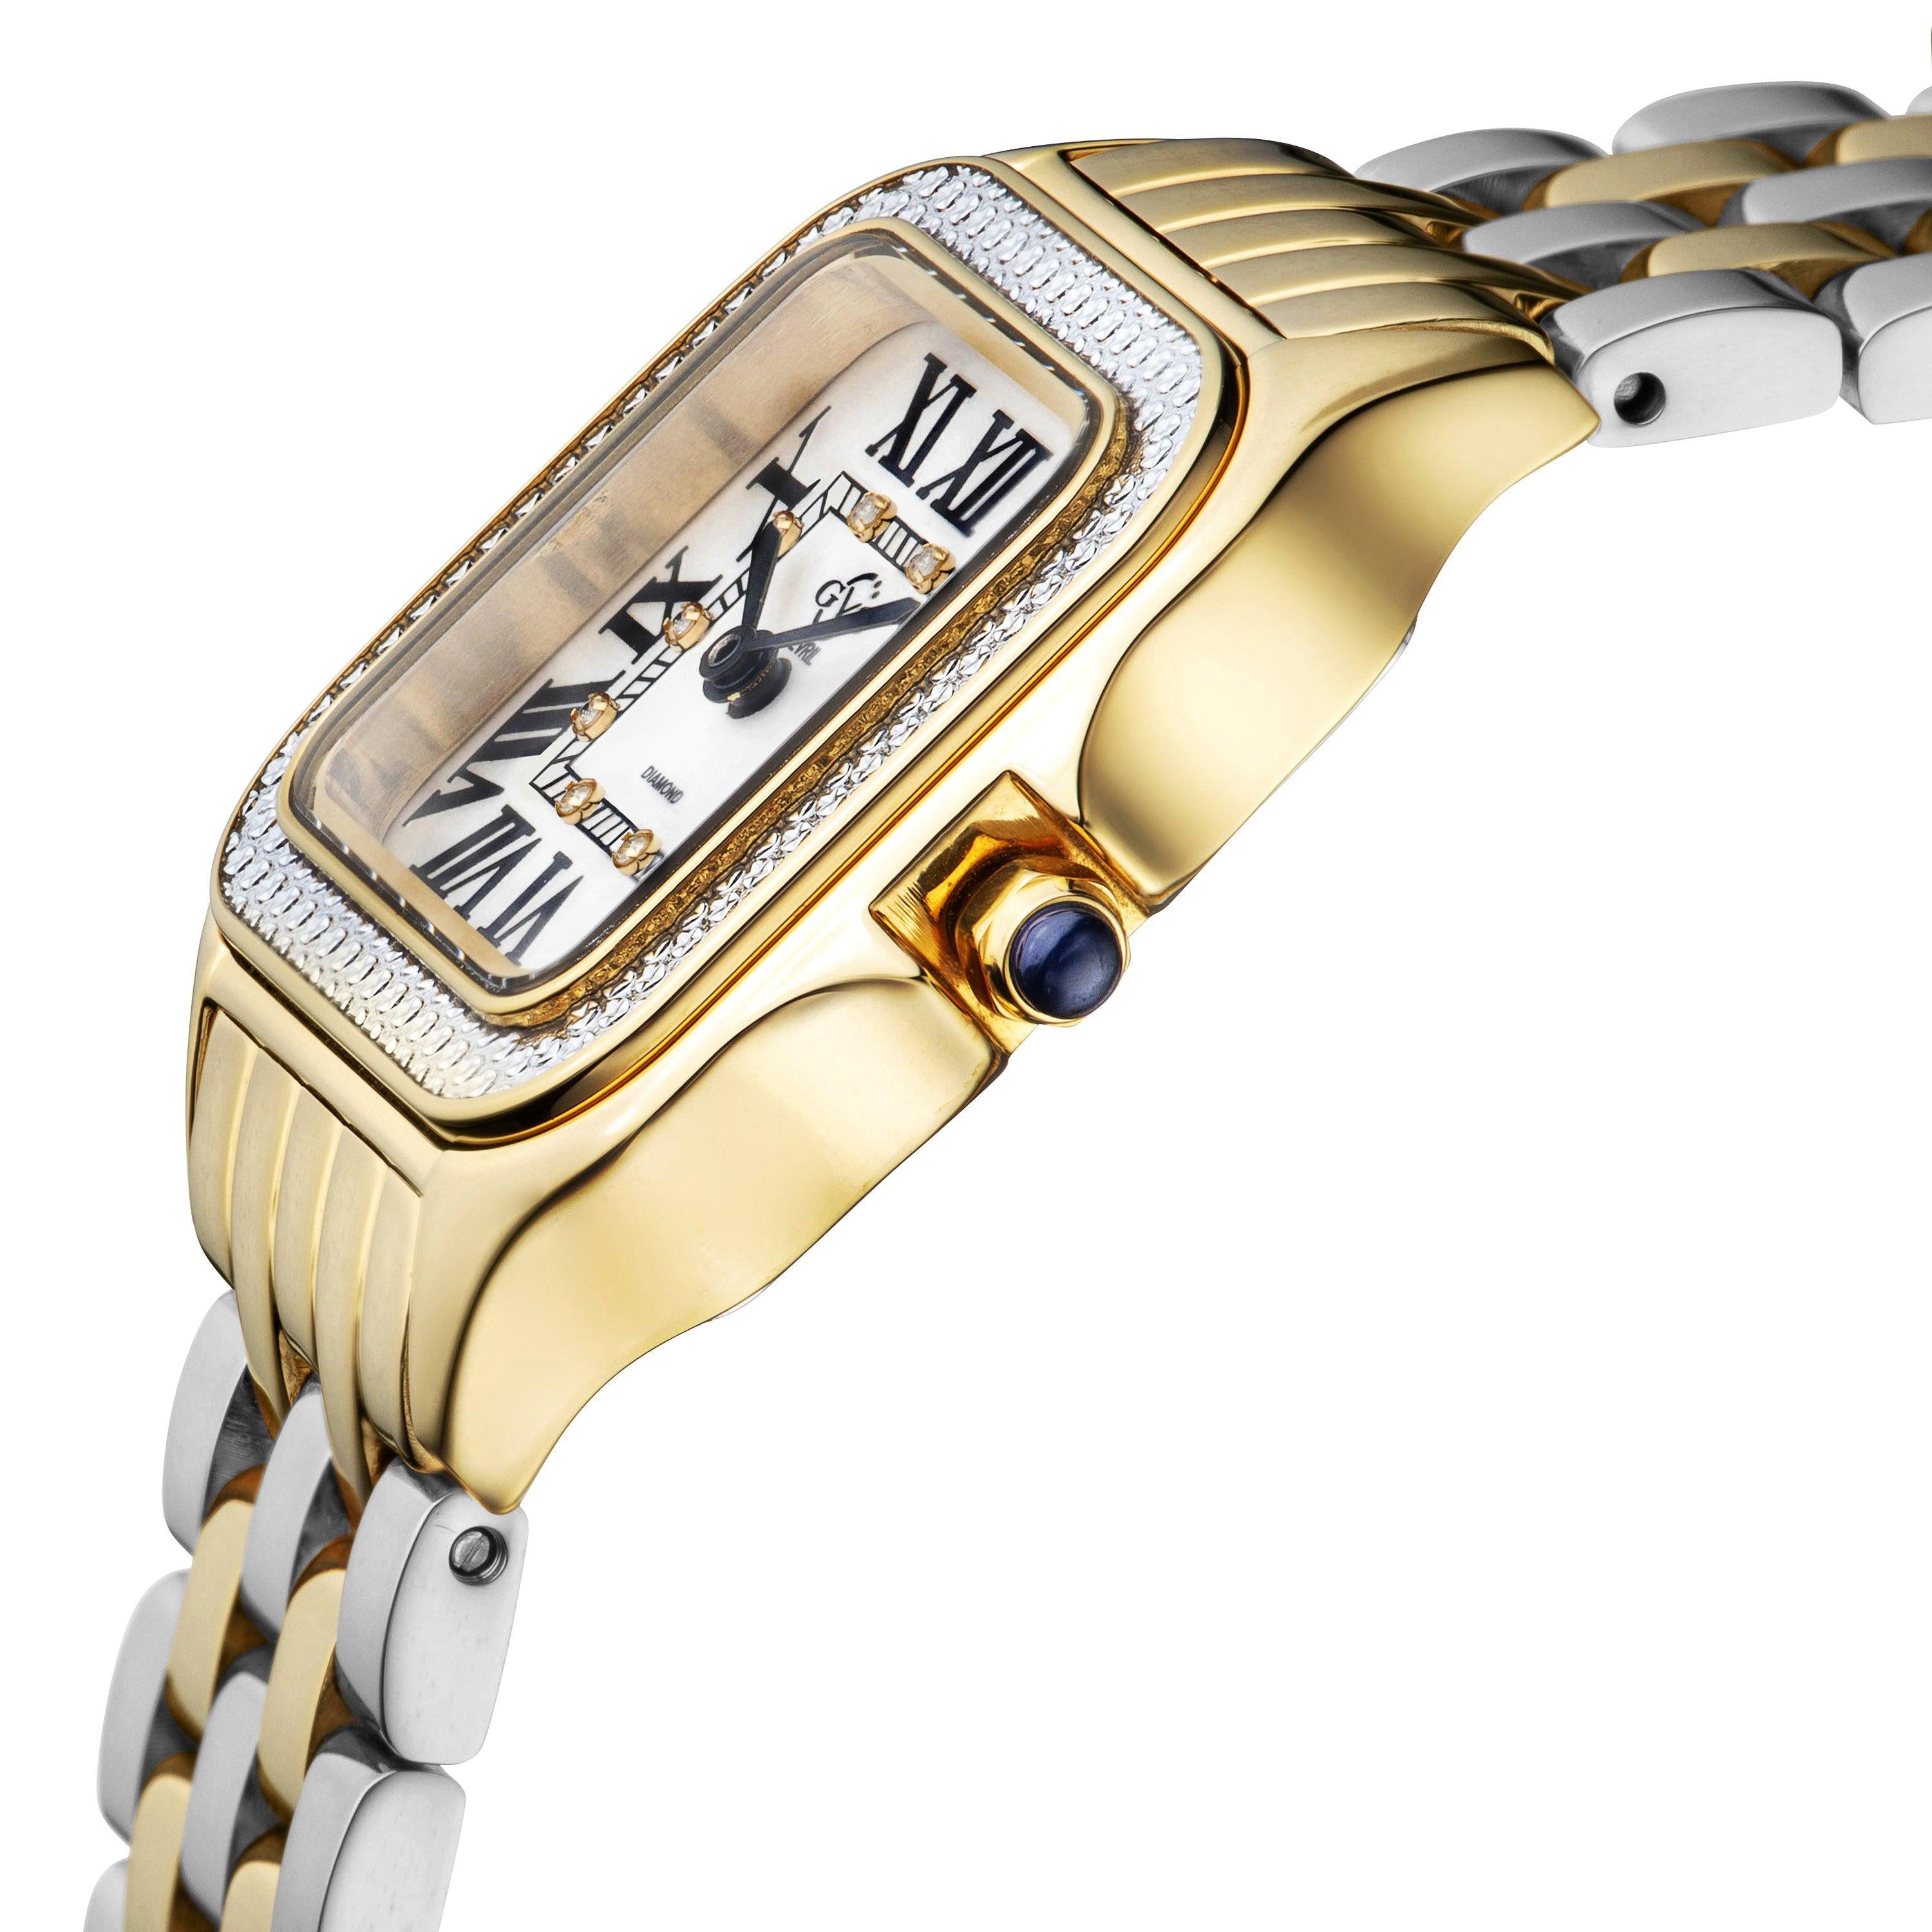 Milan Woman's Watch Diamond Quartz - New in Package | eBay